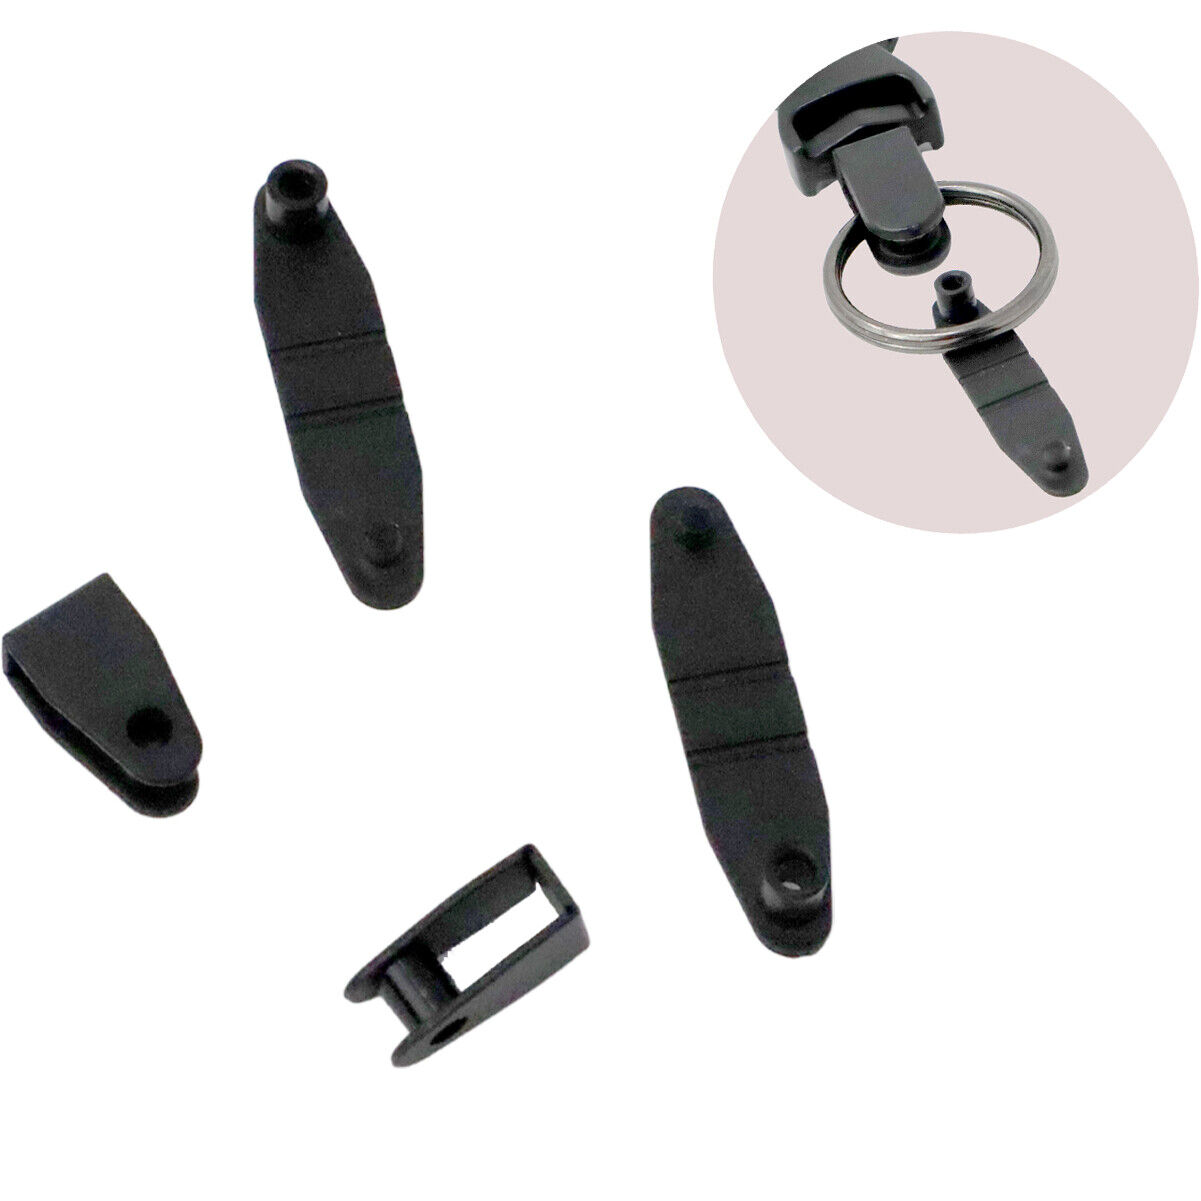 5 pcs - Black Plastic Key Ring Connectors - ID Badge Holder or Charm Adapter Tab Specialist ID 7743-1060